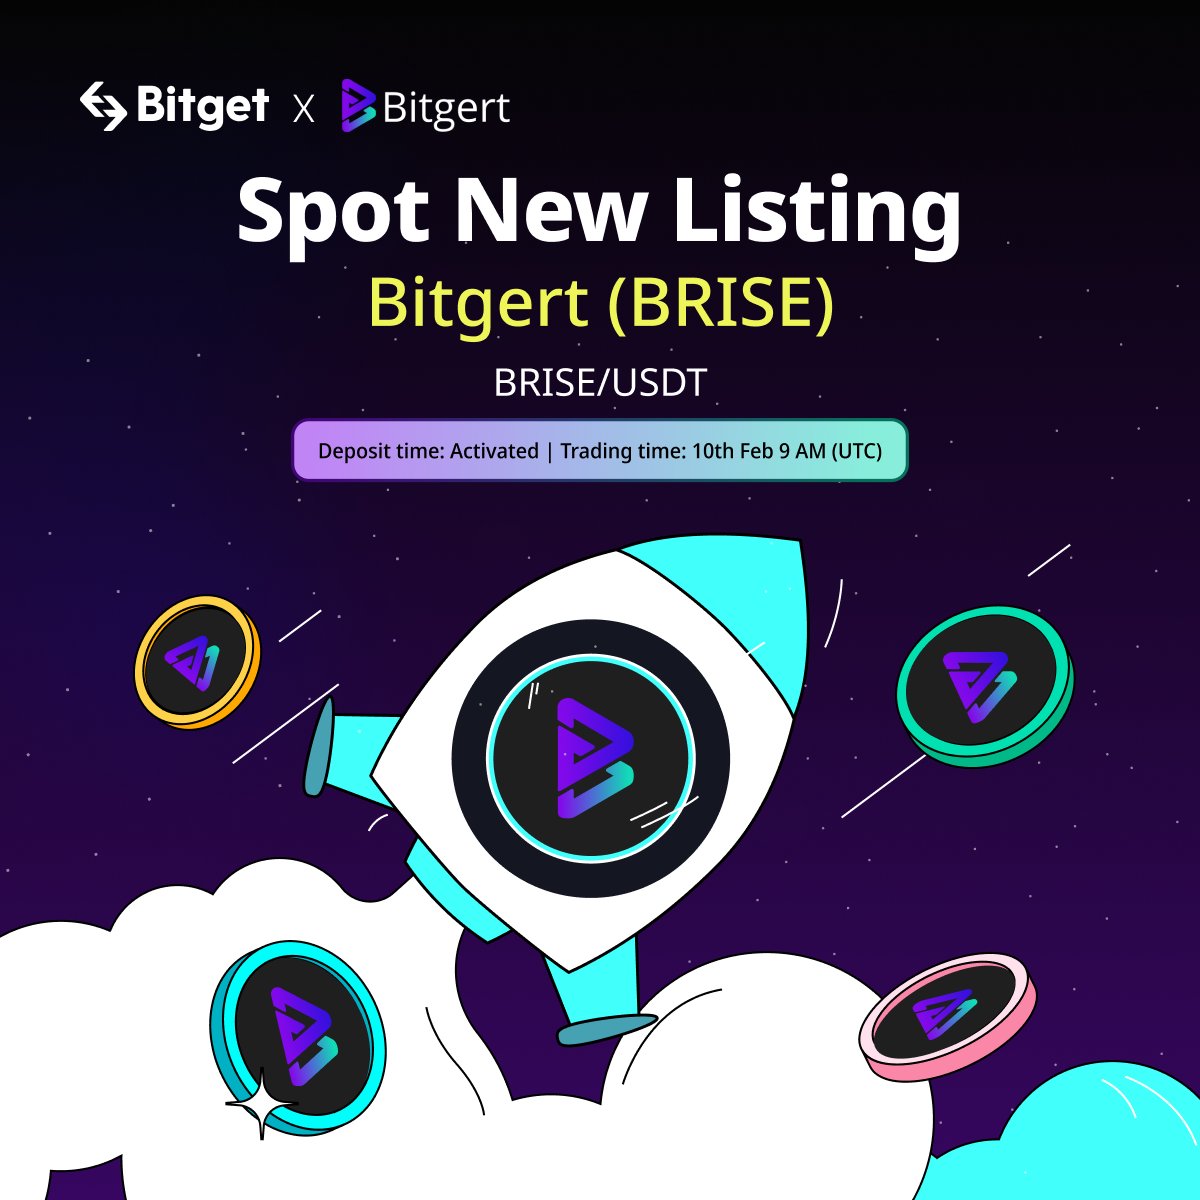 #BitgetNewListing

🆕 #Bitget will list $BRISE/USDT trading pair on Feb 10th in #PublicChain Zone. @bitgertbrise 

Details: bitget.com/en/support